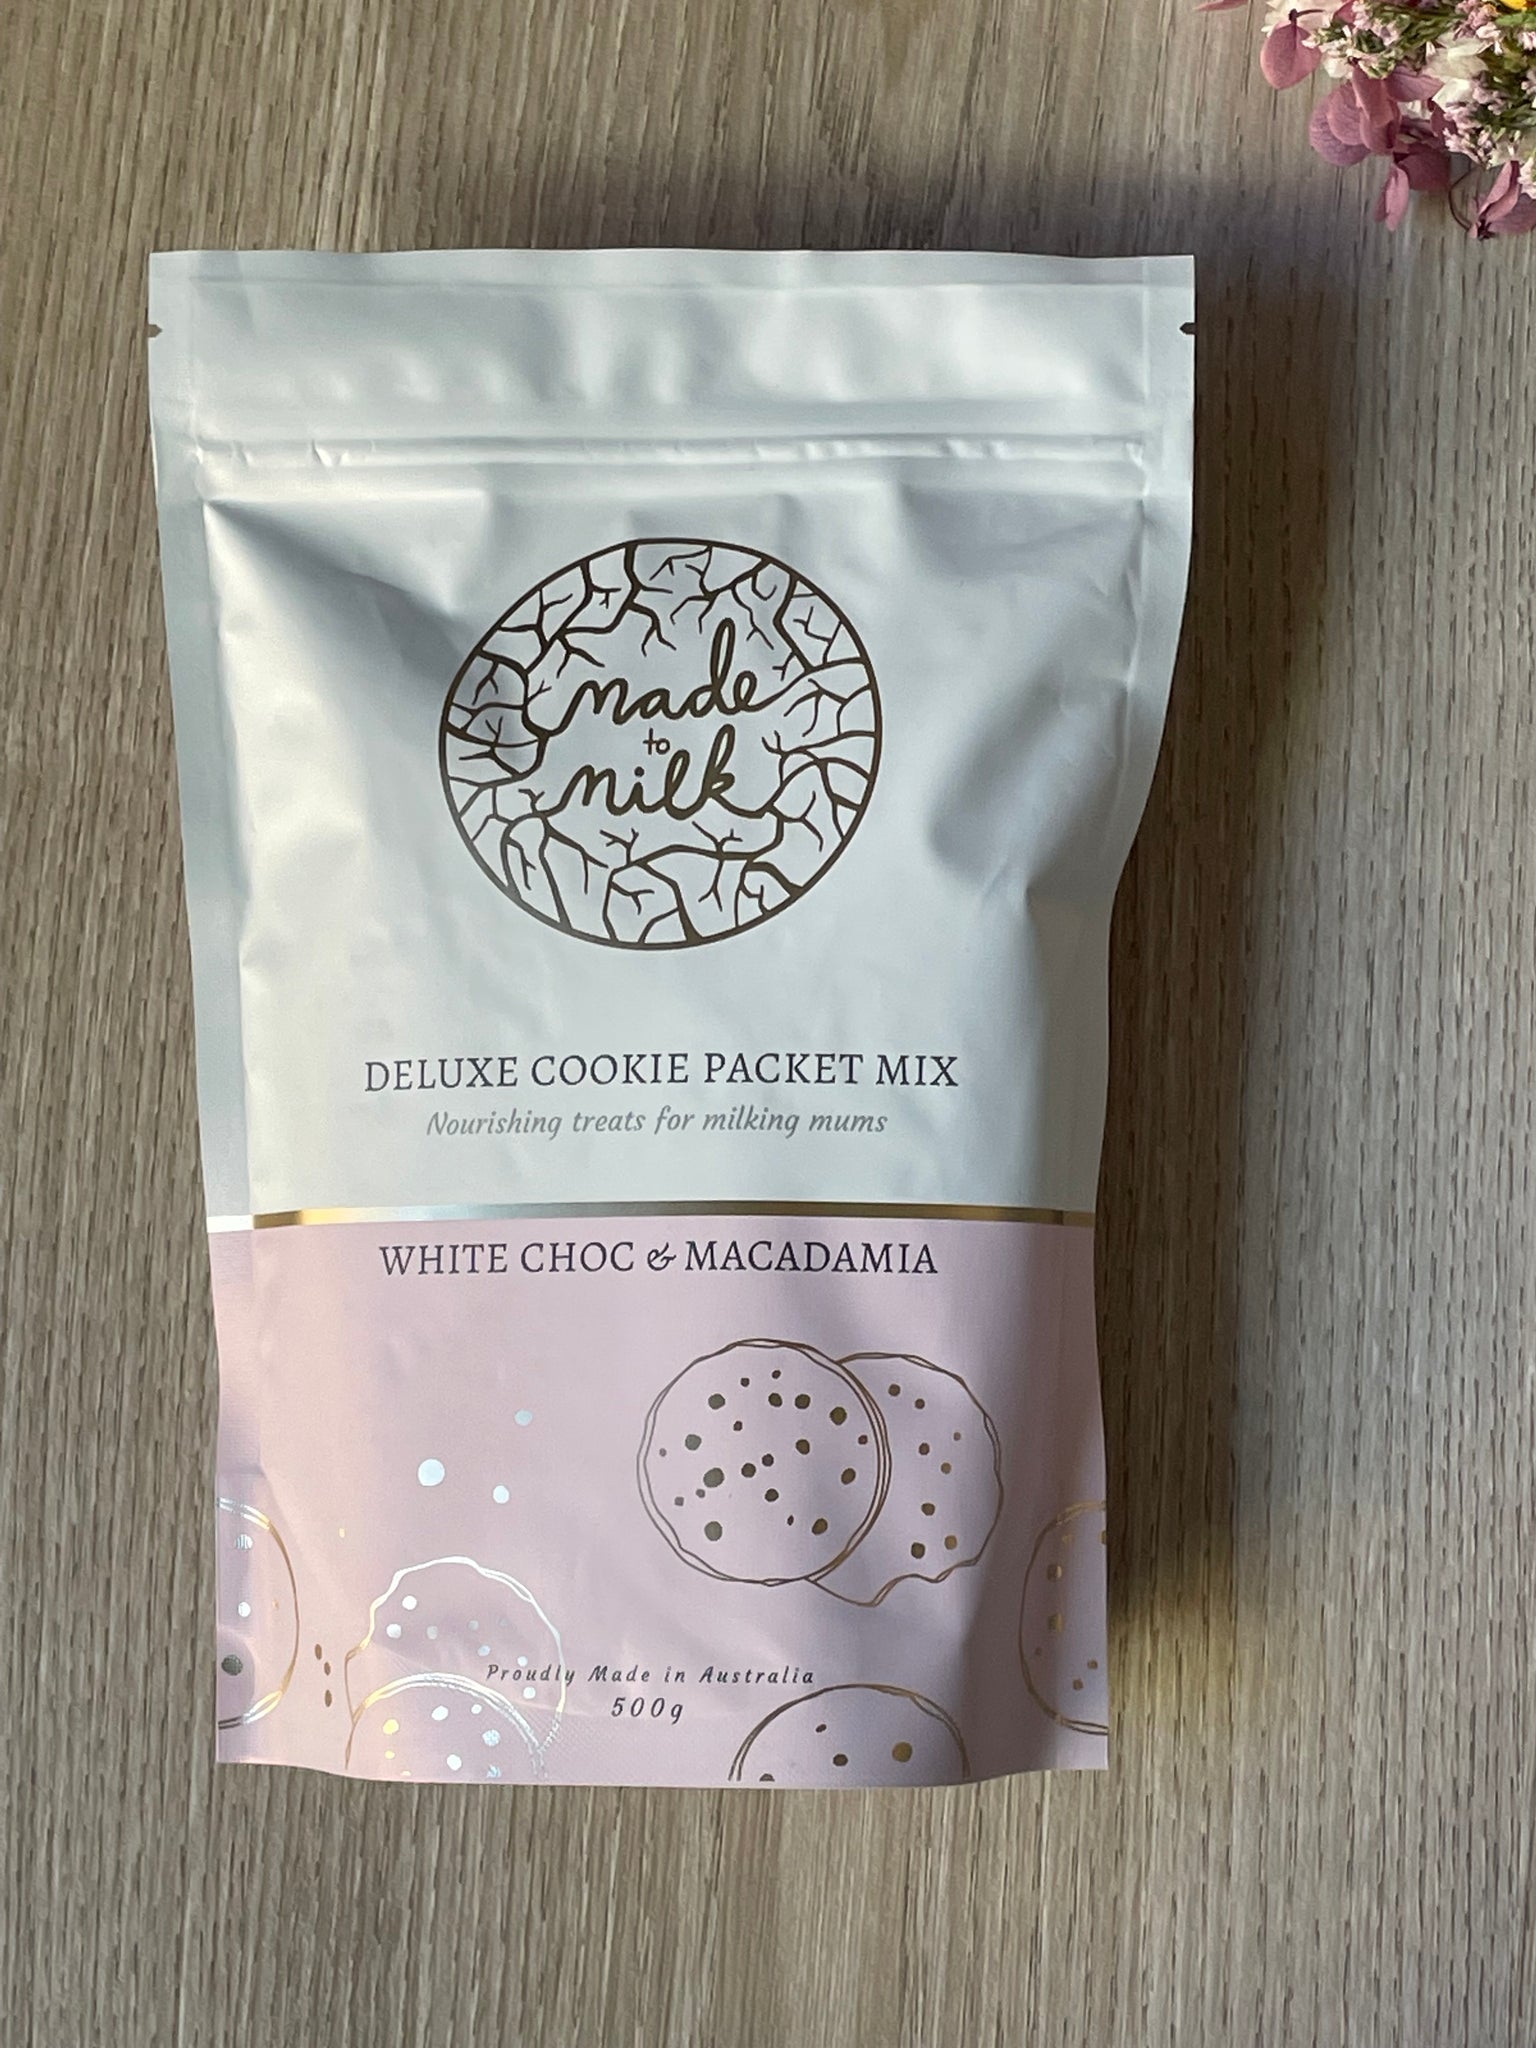 White Chocolate & Macadamia Lactation Cookie - Packet Mix